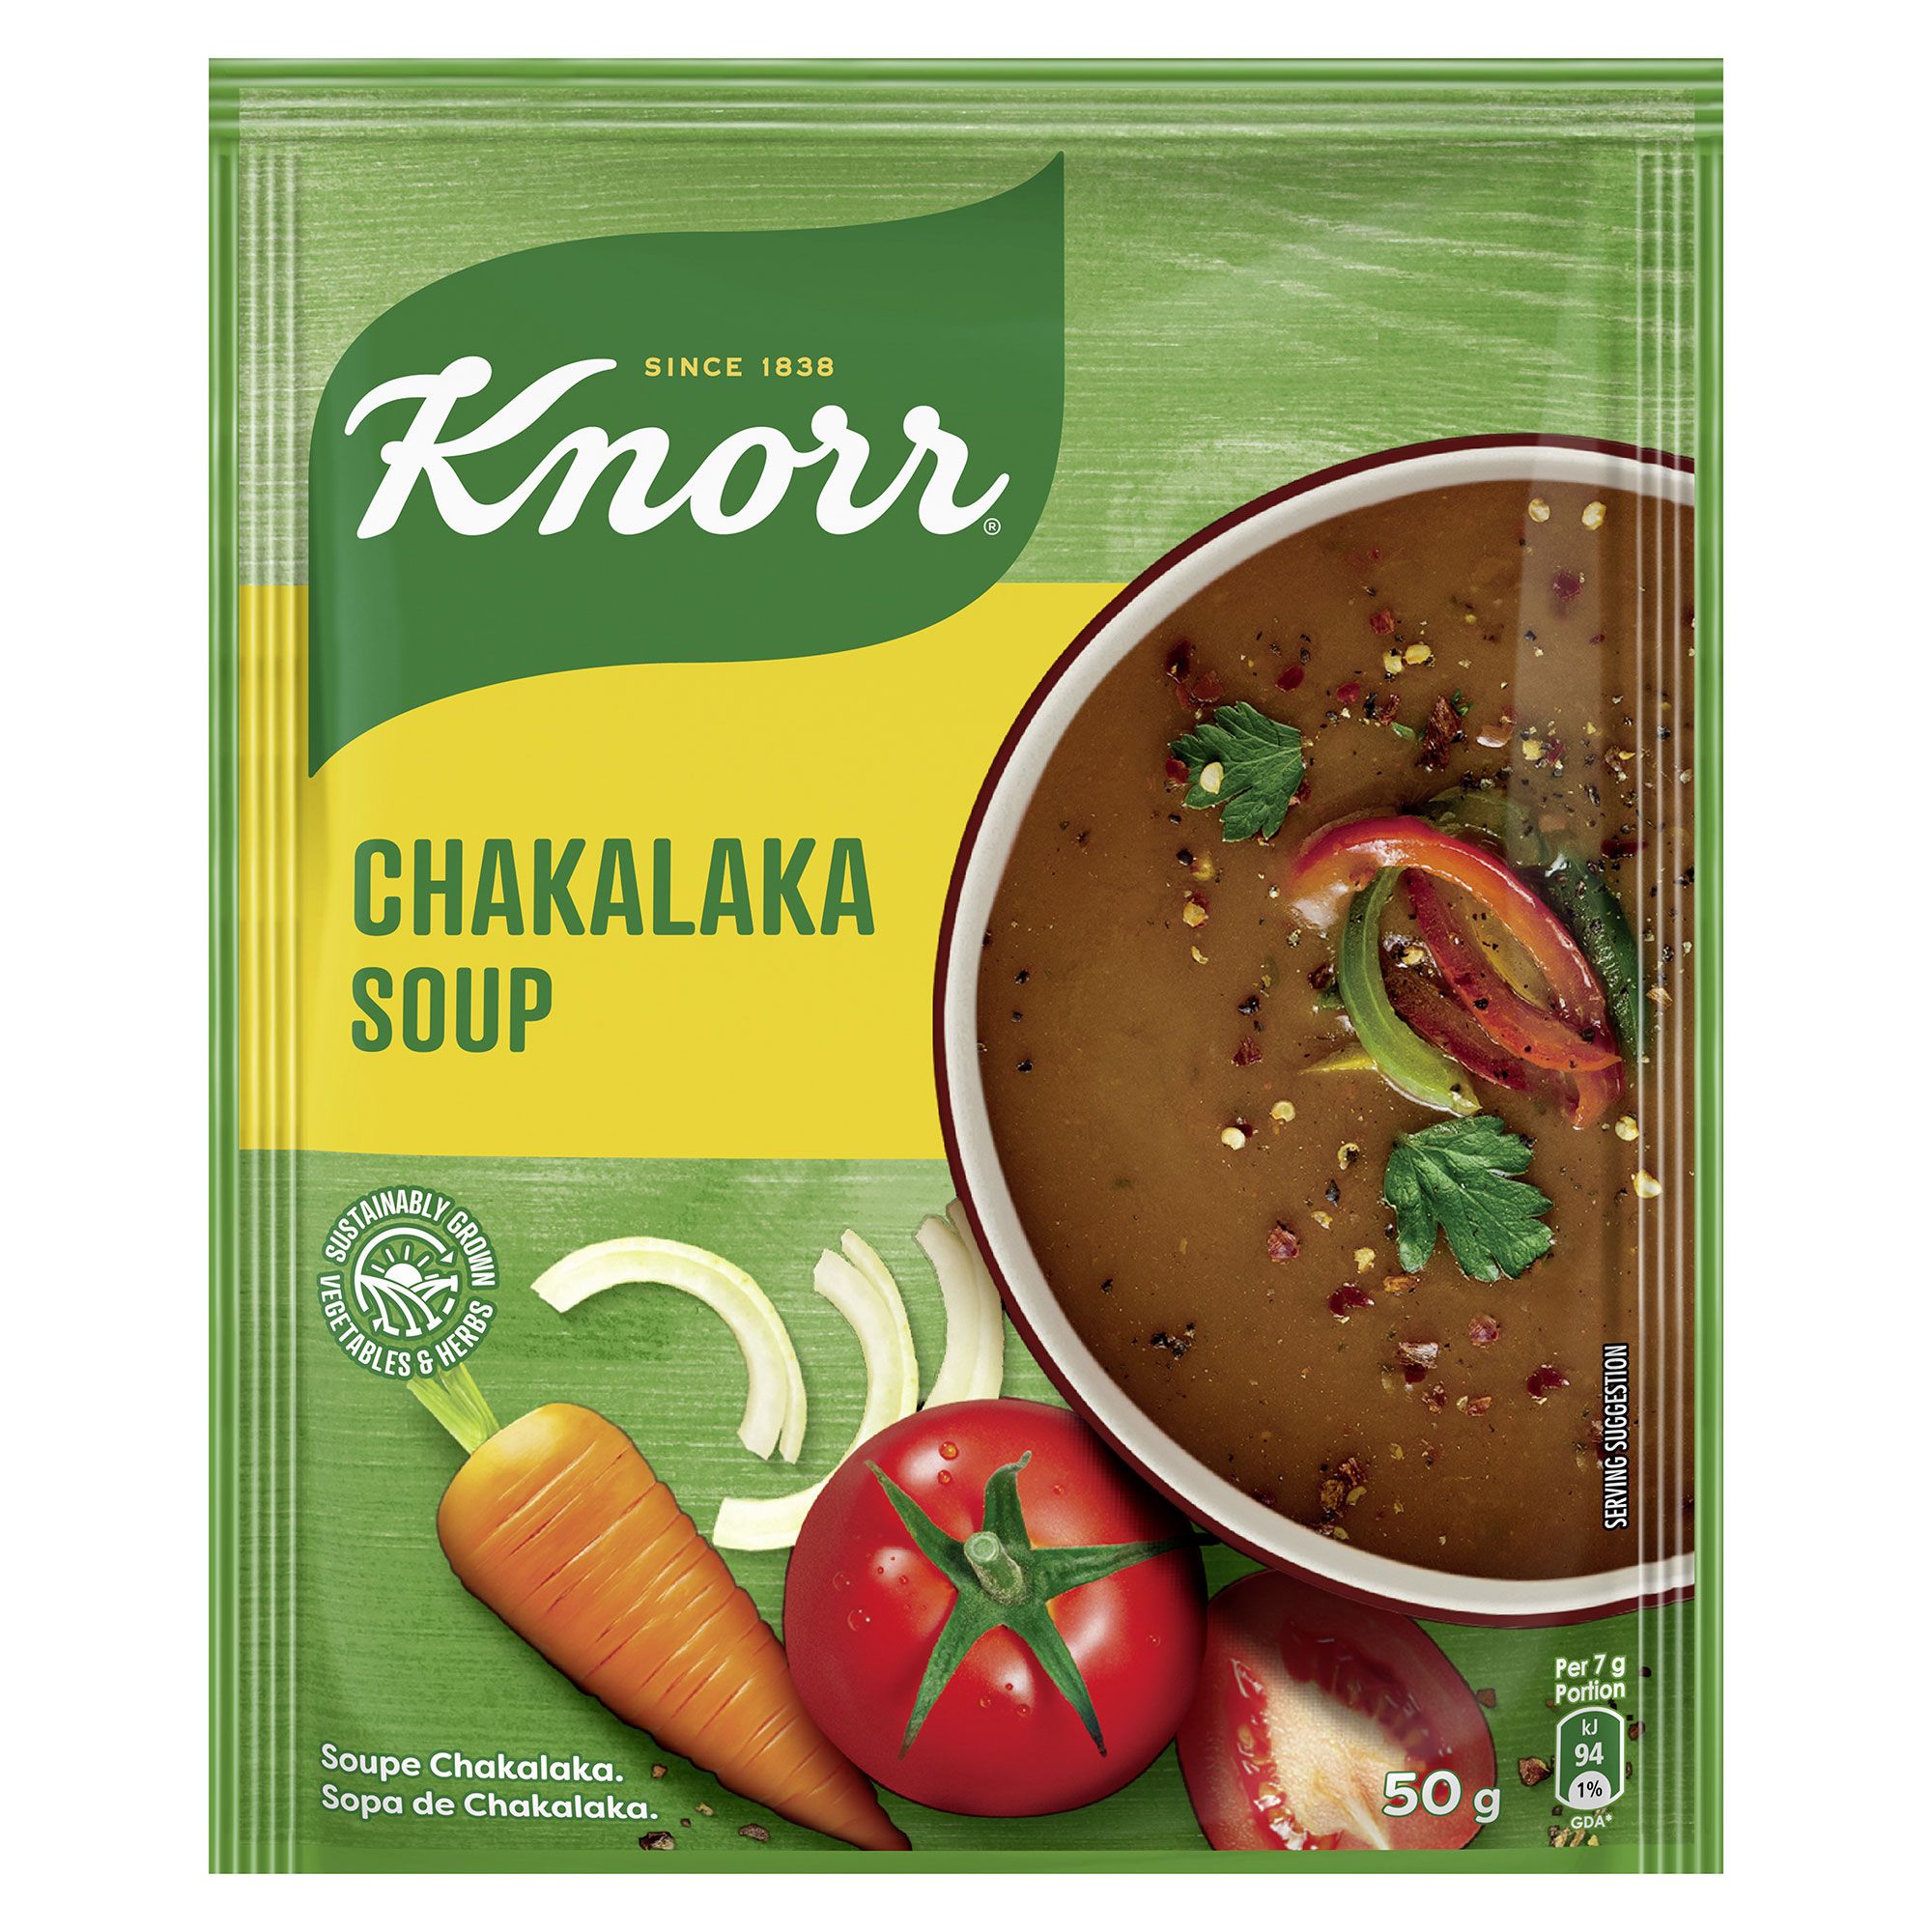 Knorr Chakalaka Soup